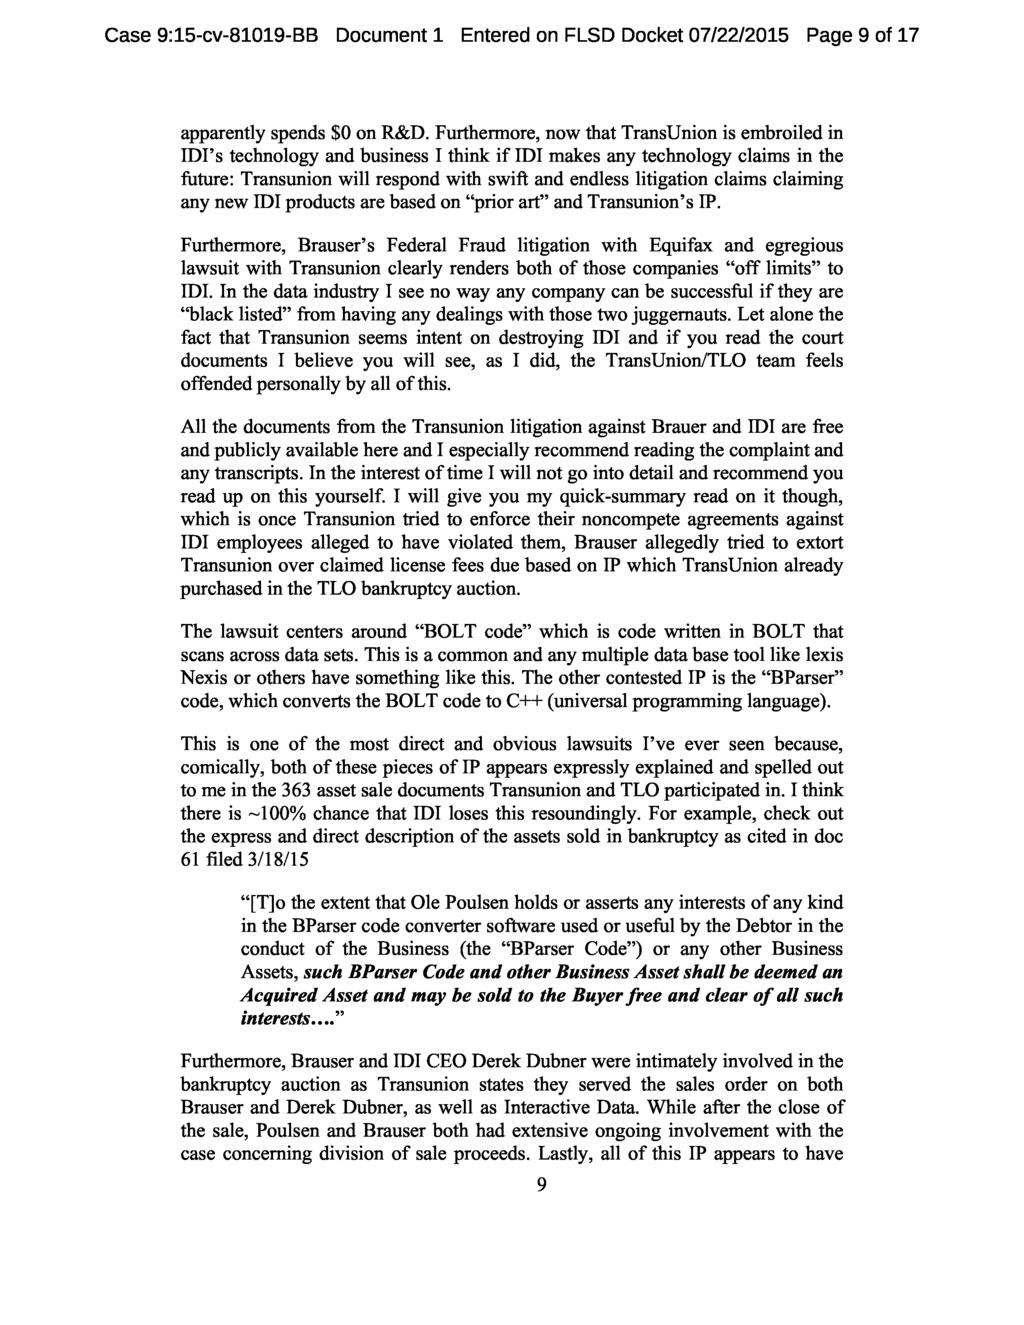 Case 9:15-cv-81019-BB Document 1 Entered on FLSD Docket 07/22/2015 Page 9 of 17 apparently spends $0 on R&D.